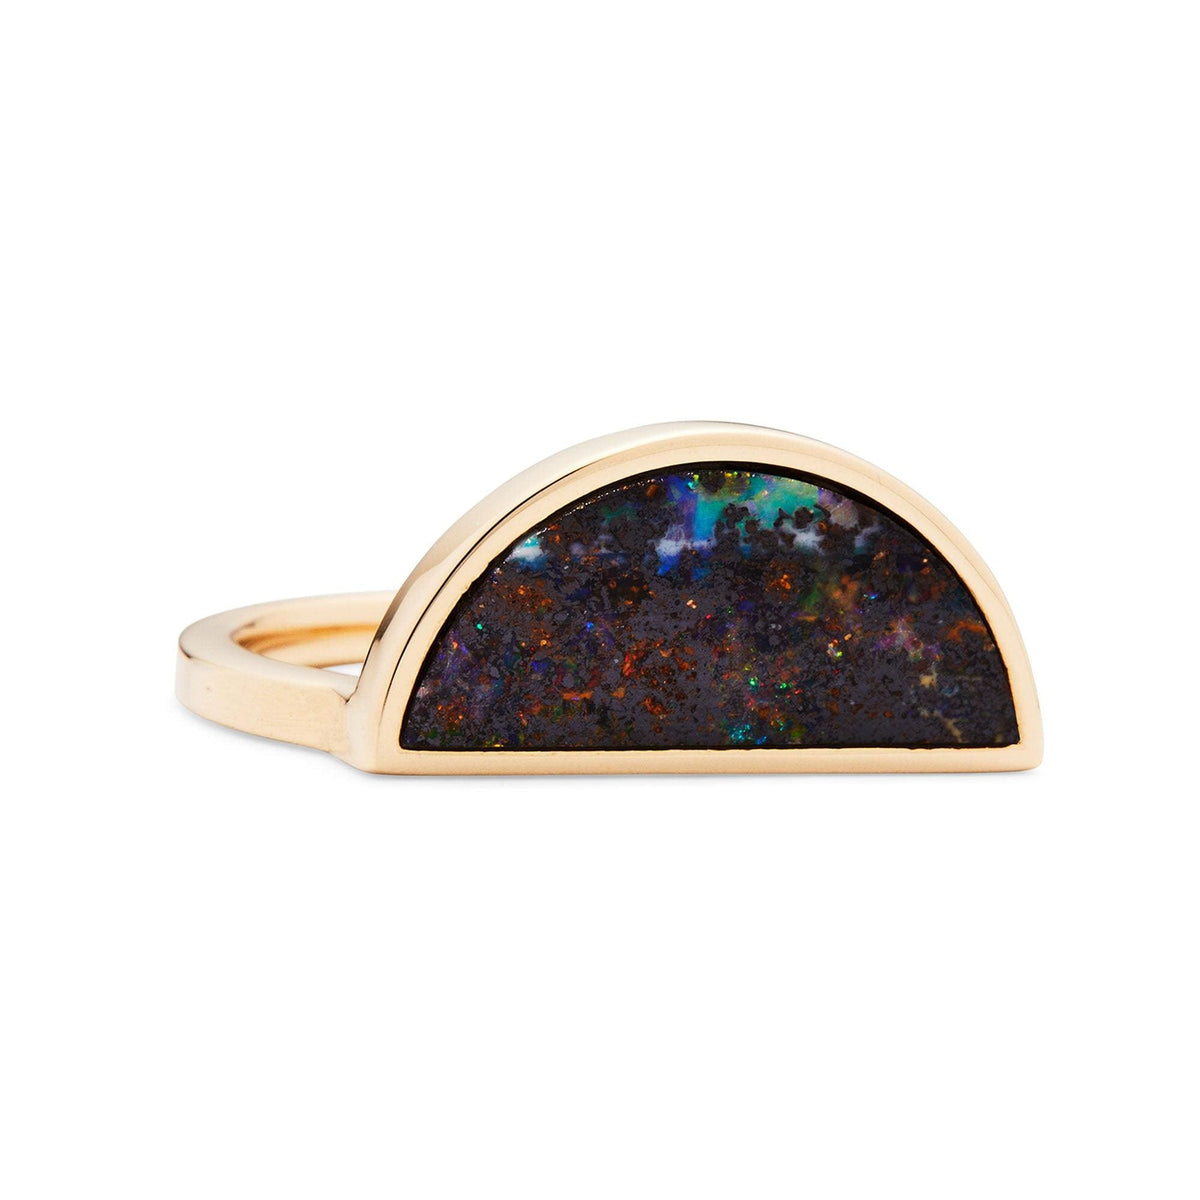 Australian Boulder Opal Ring